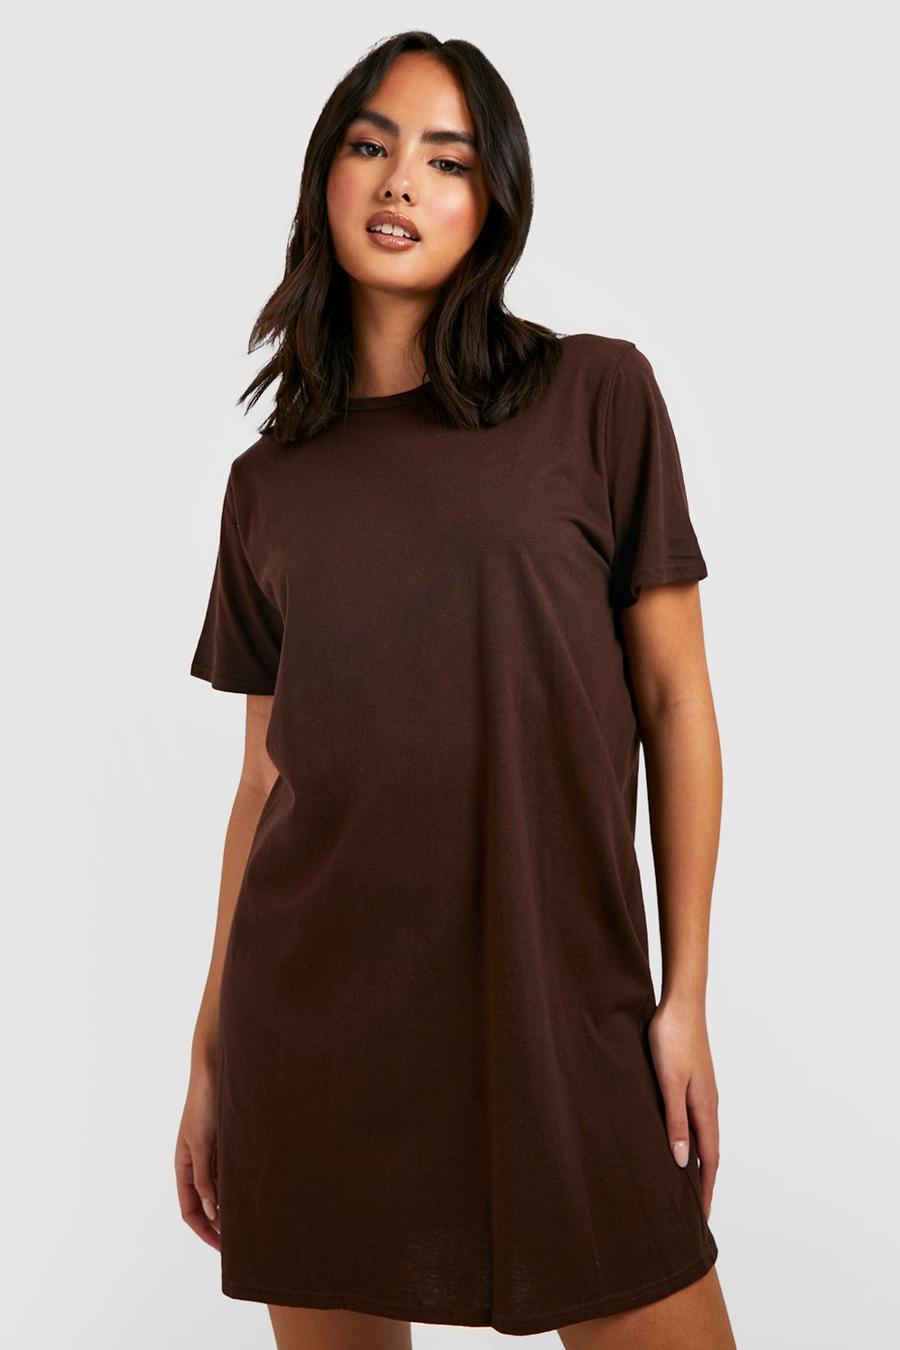 Chocolate brown Basic Sleep T Shirt